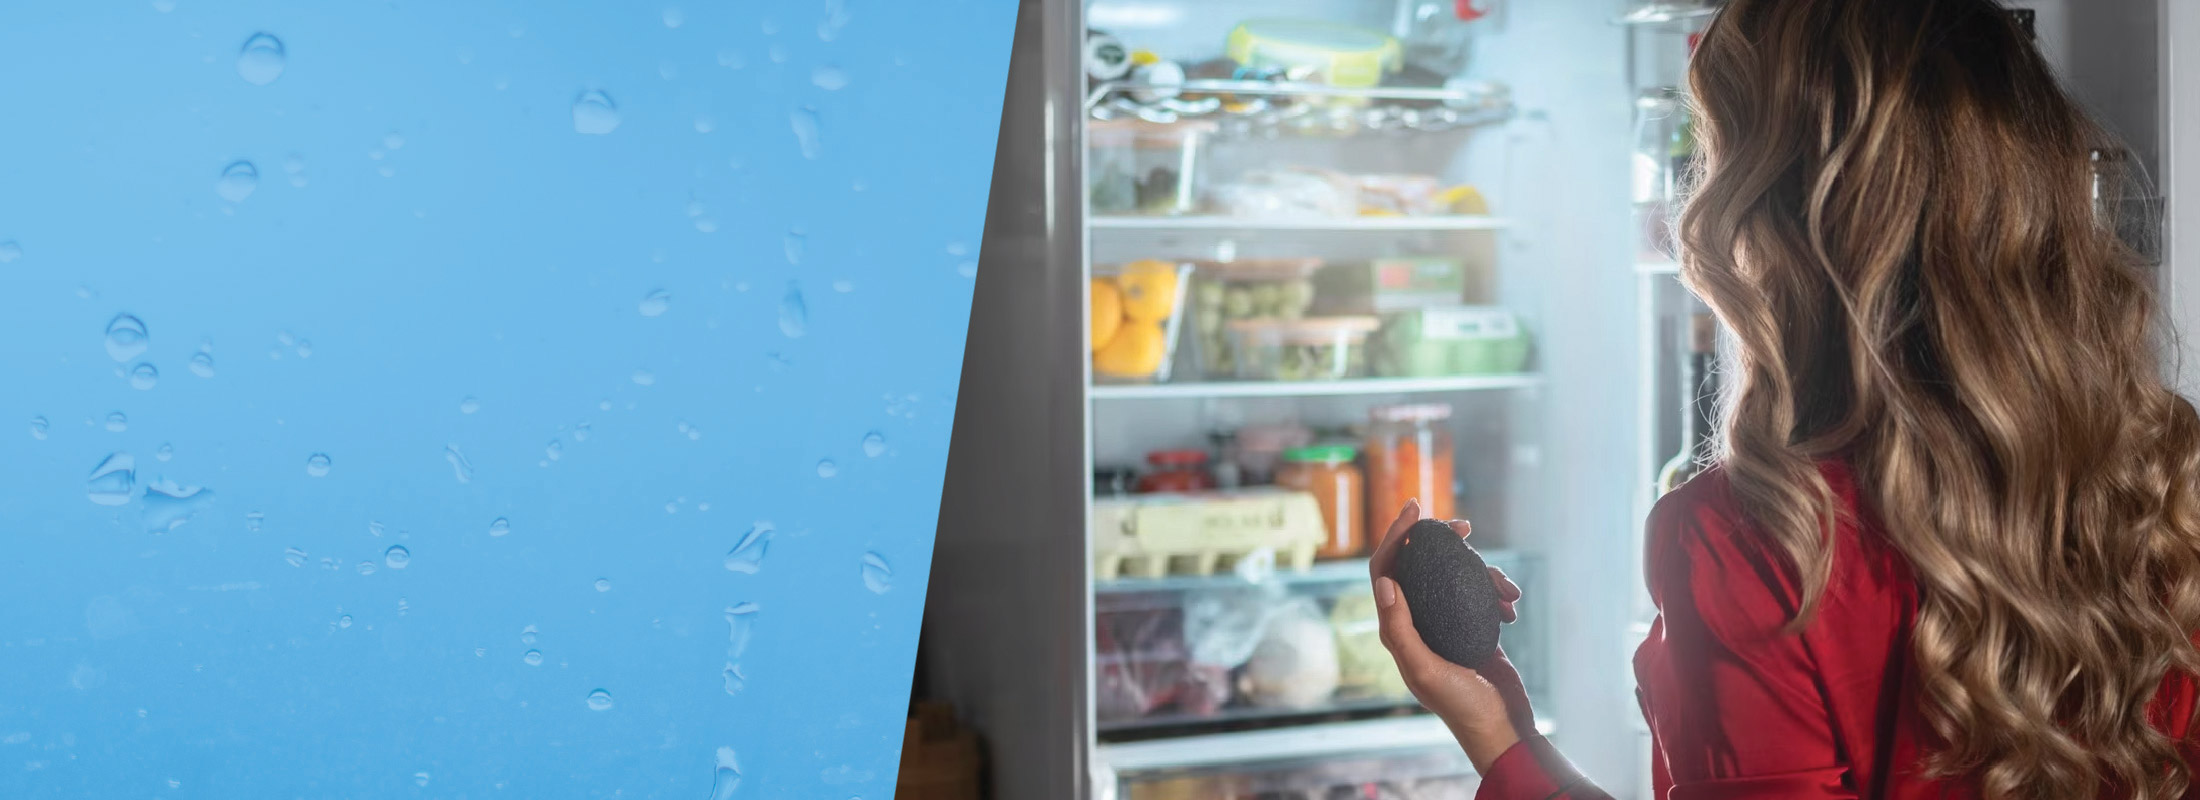 We service all fridge & freezer brands